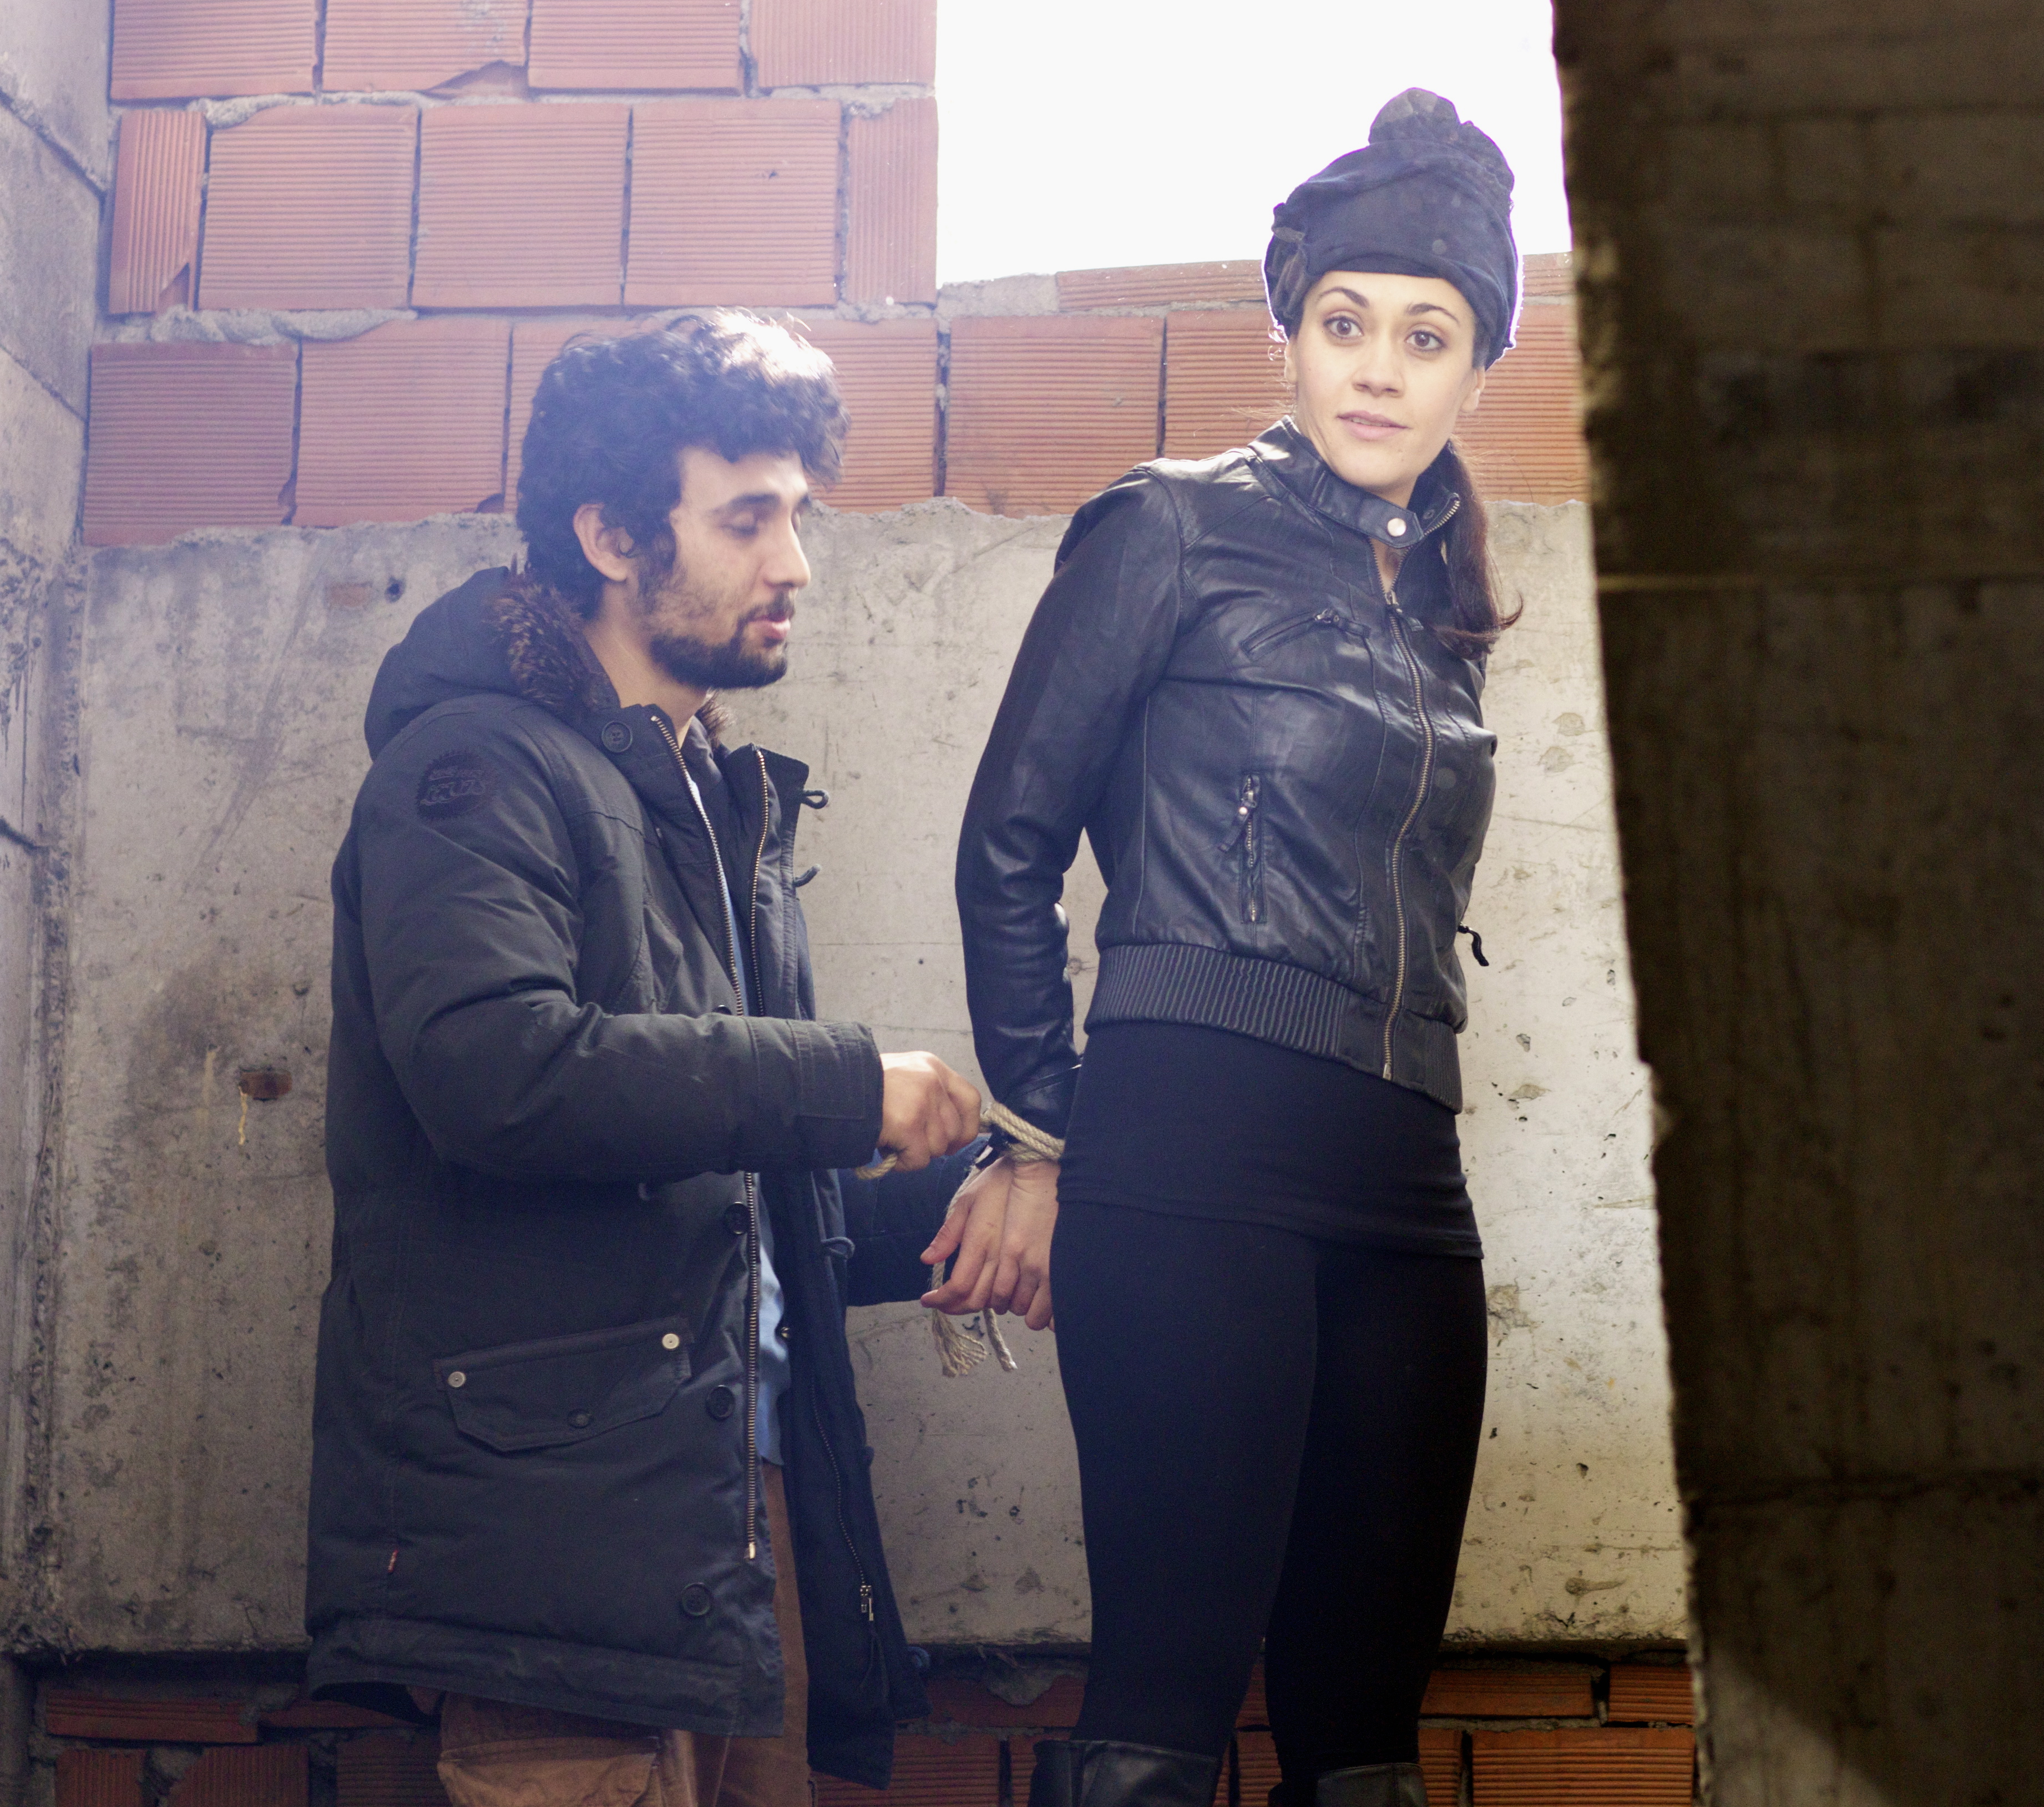 Seda Egridere on the set of Alina, The Turkish Assassin.